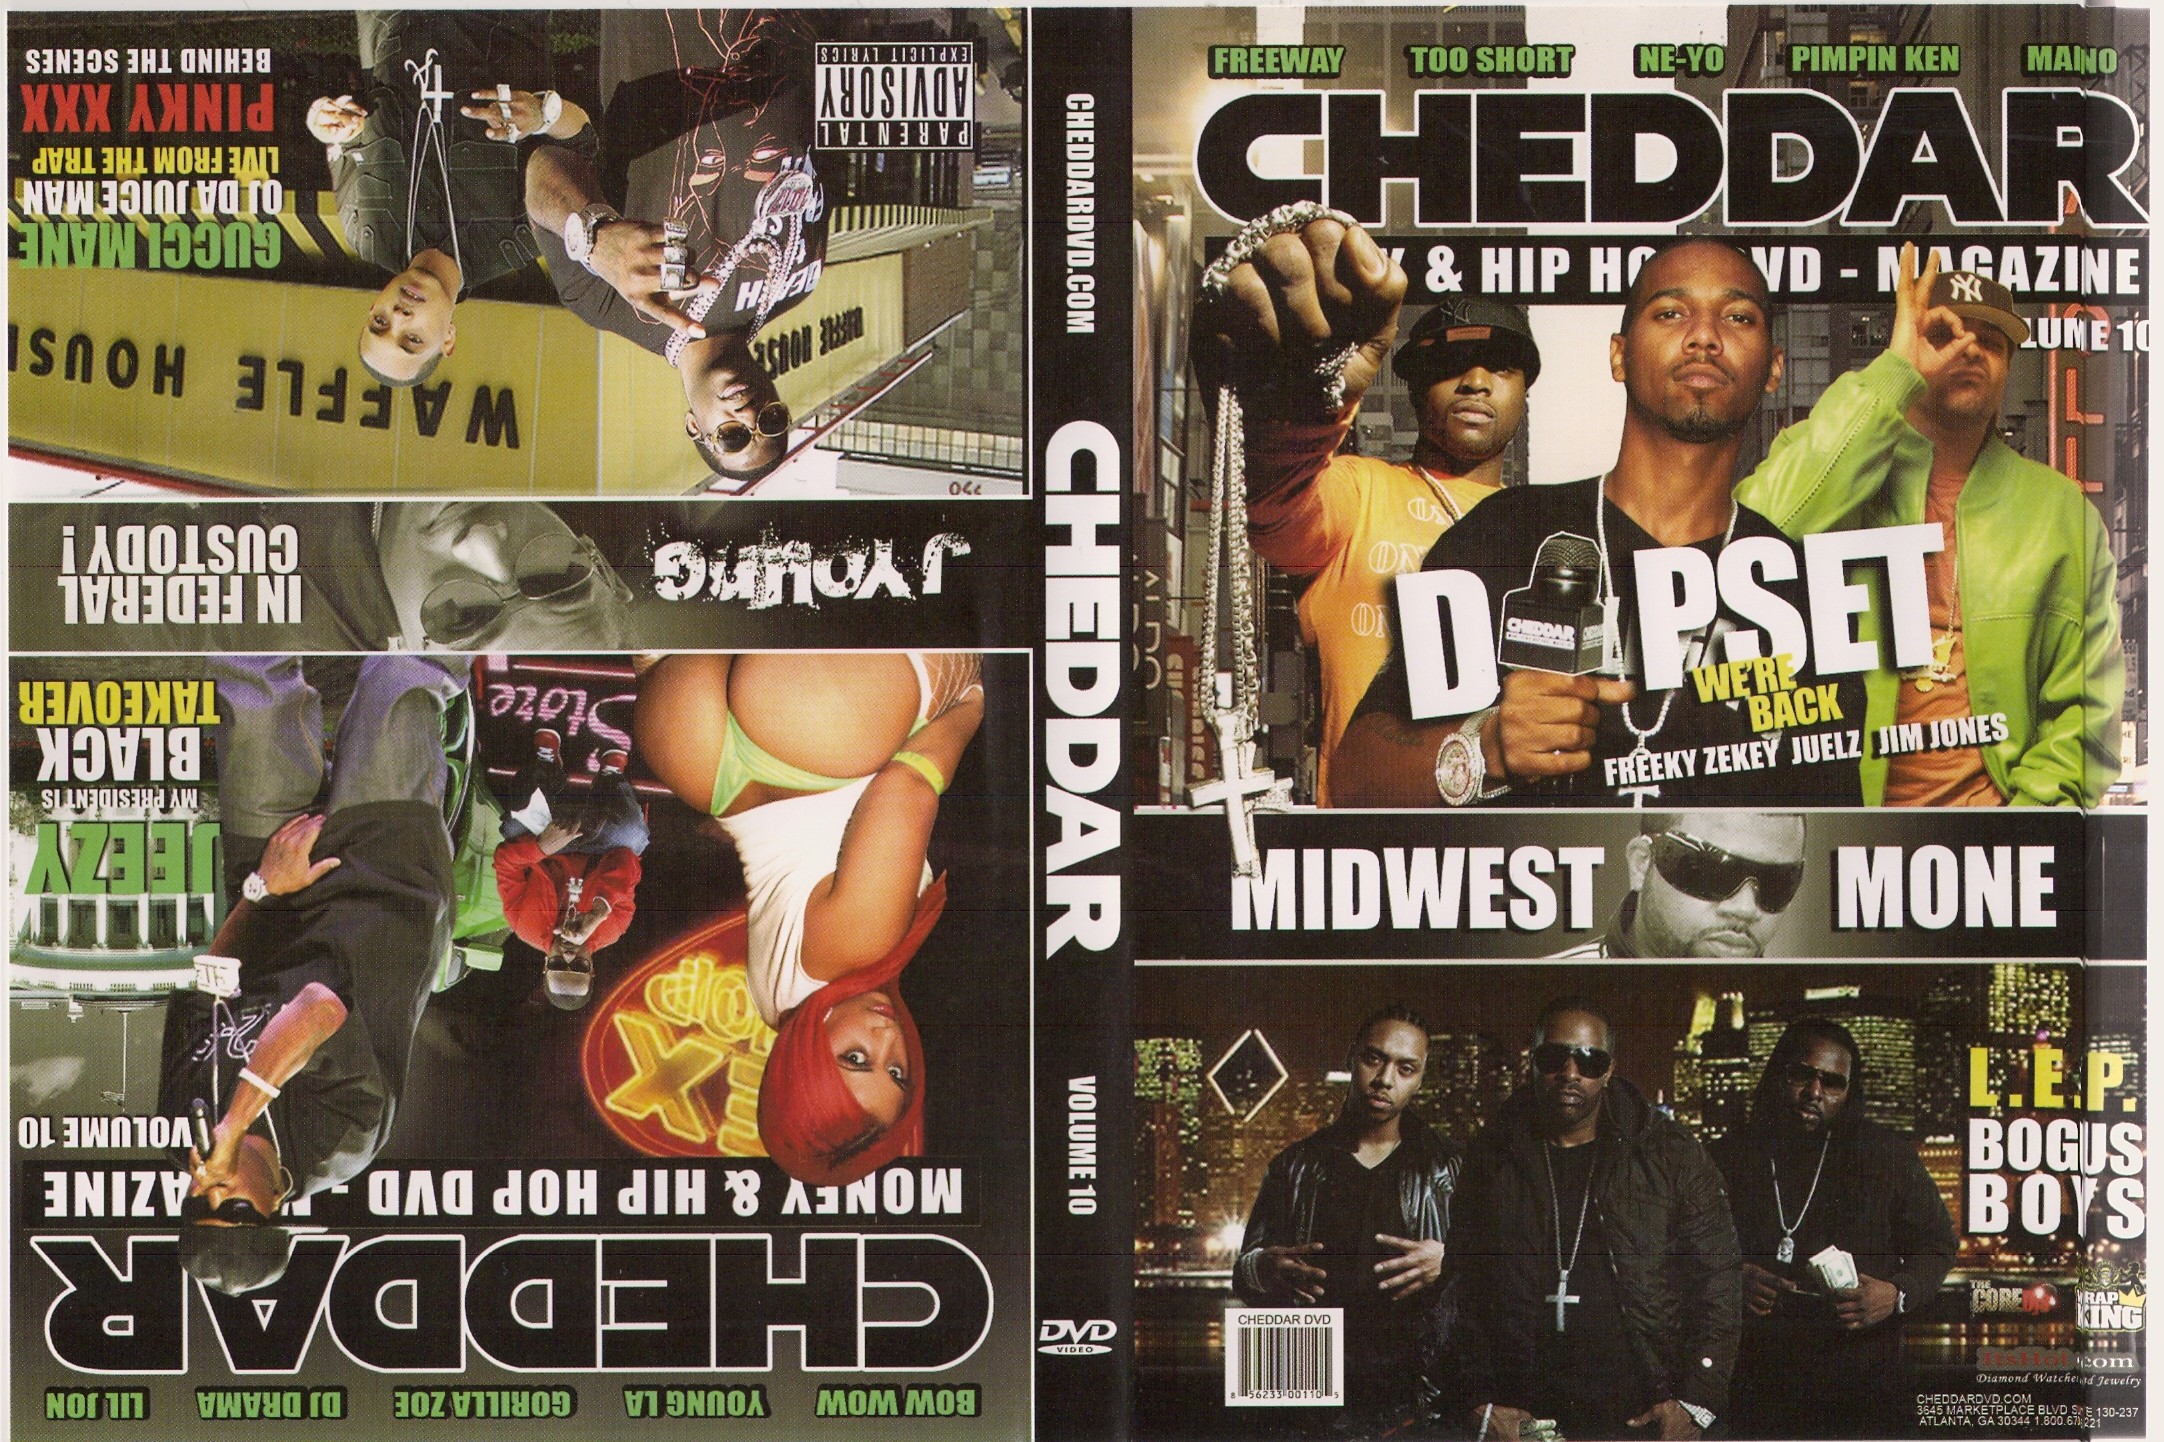 Cheddar DVD #10 - Money & Hip-Hop DVD